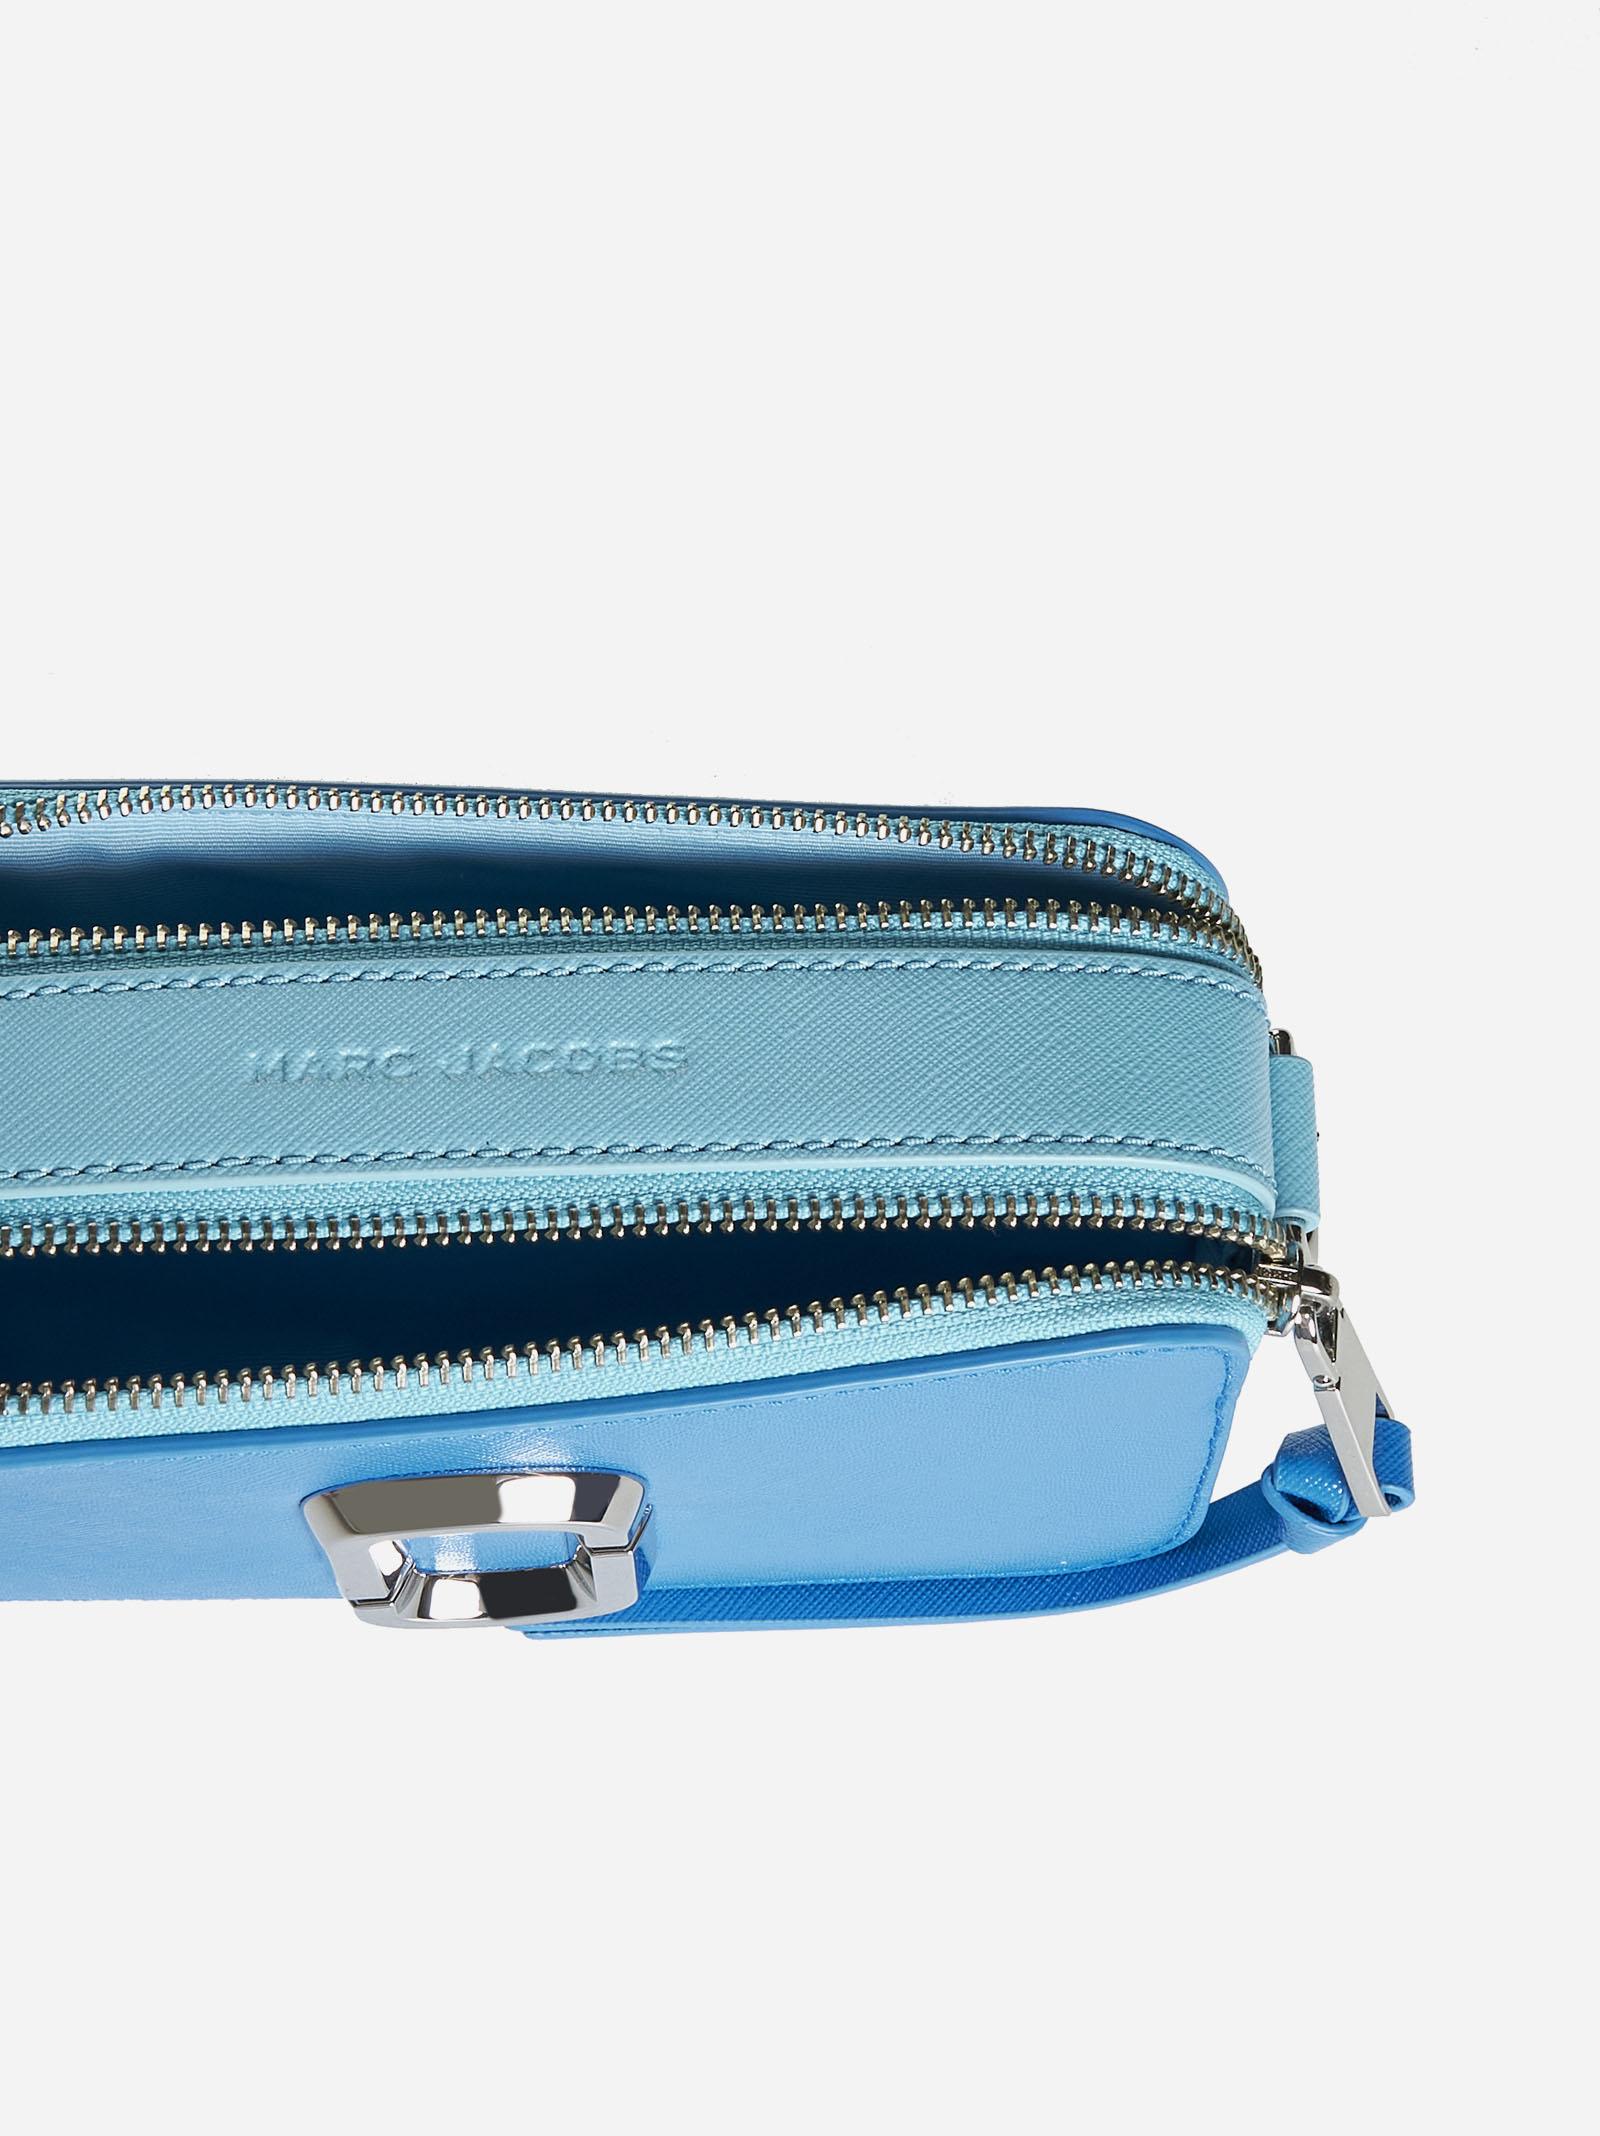 Marc Jacobs The Bi-color Snapshot Bag